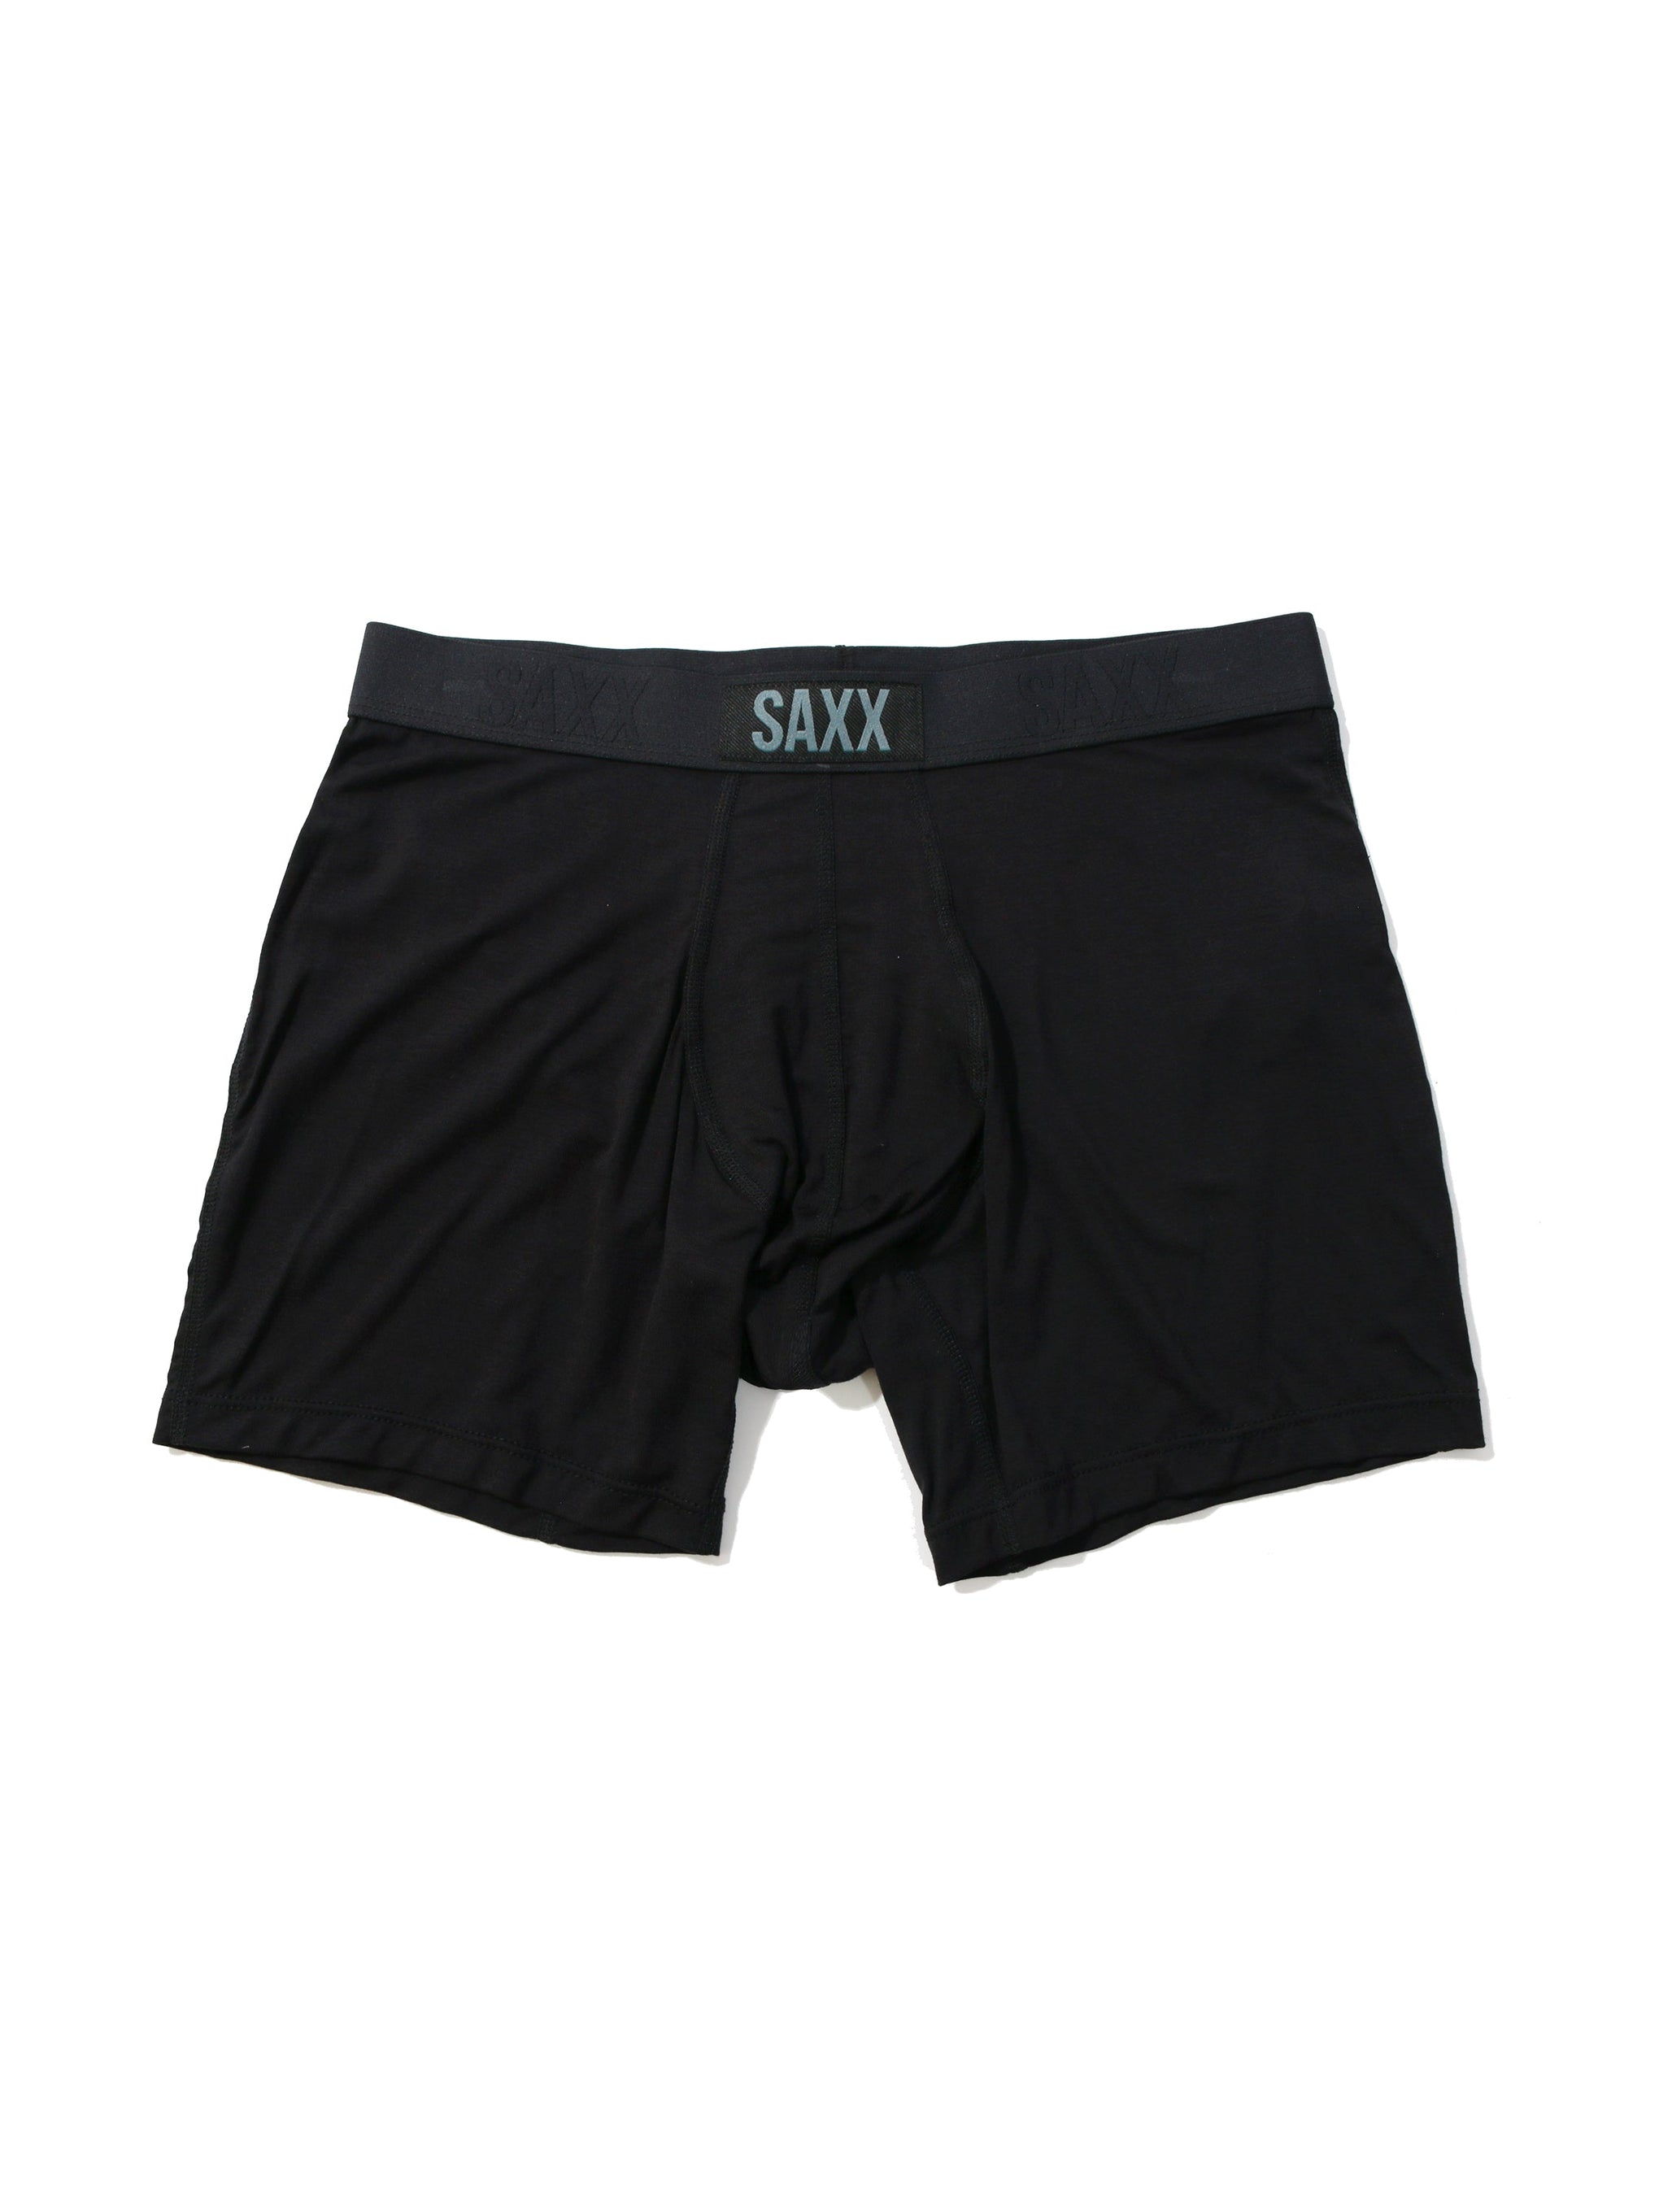 Signature Lace Original Rise Thong and SAXX Super Soft Vibe Boxer Brief